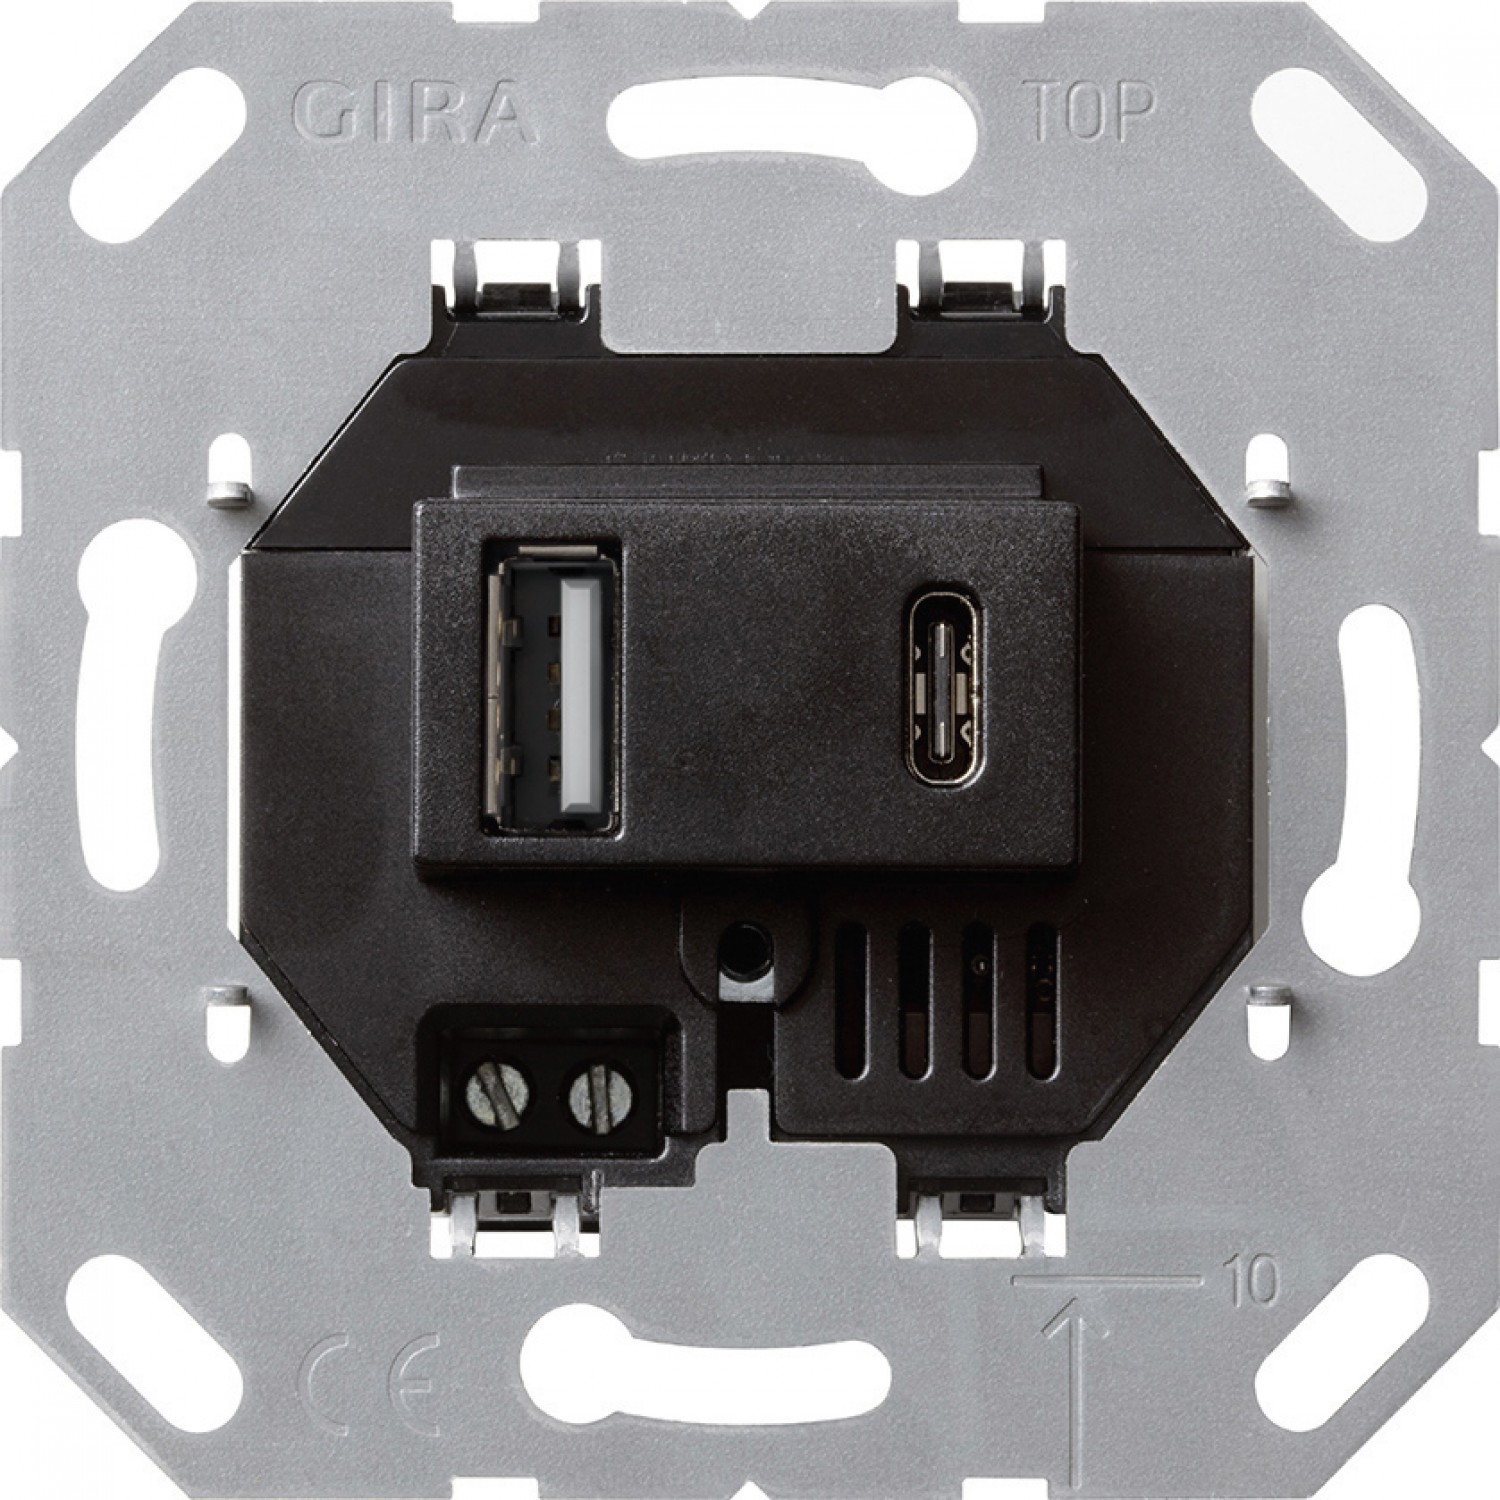 alt_image Электрофурнитура Gira Источник электропитания USB тип A/C, черный 236900